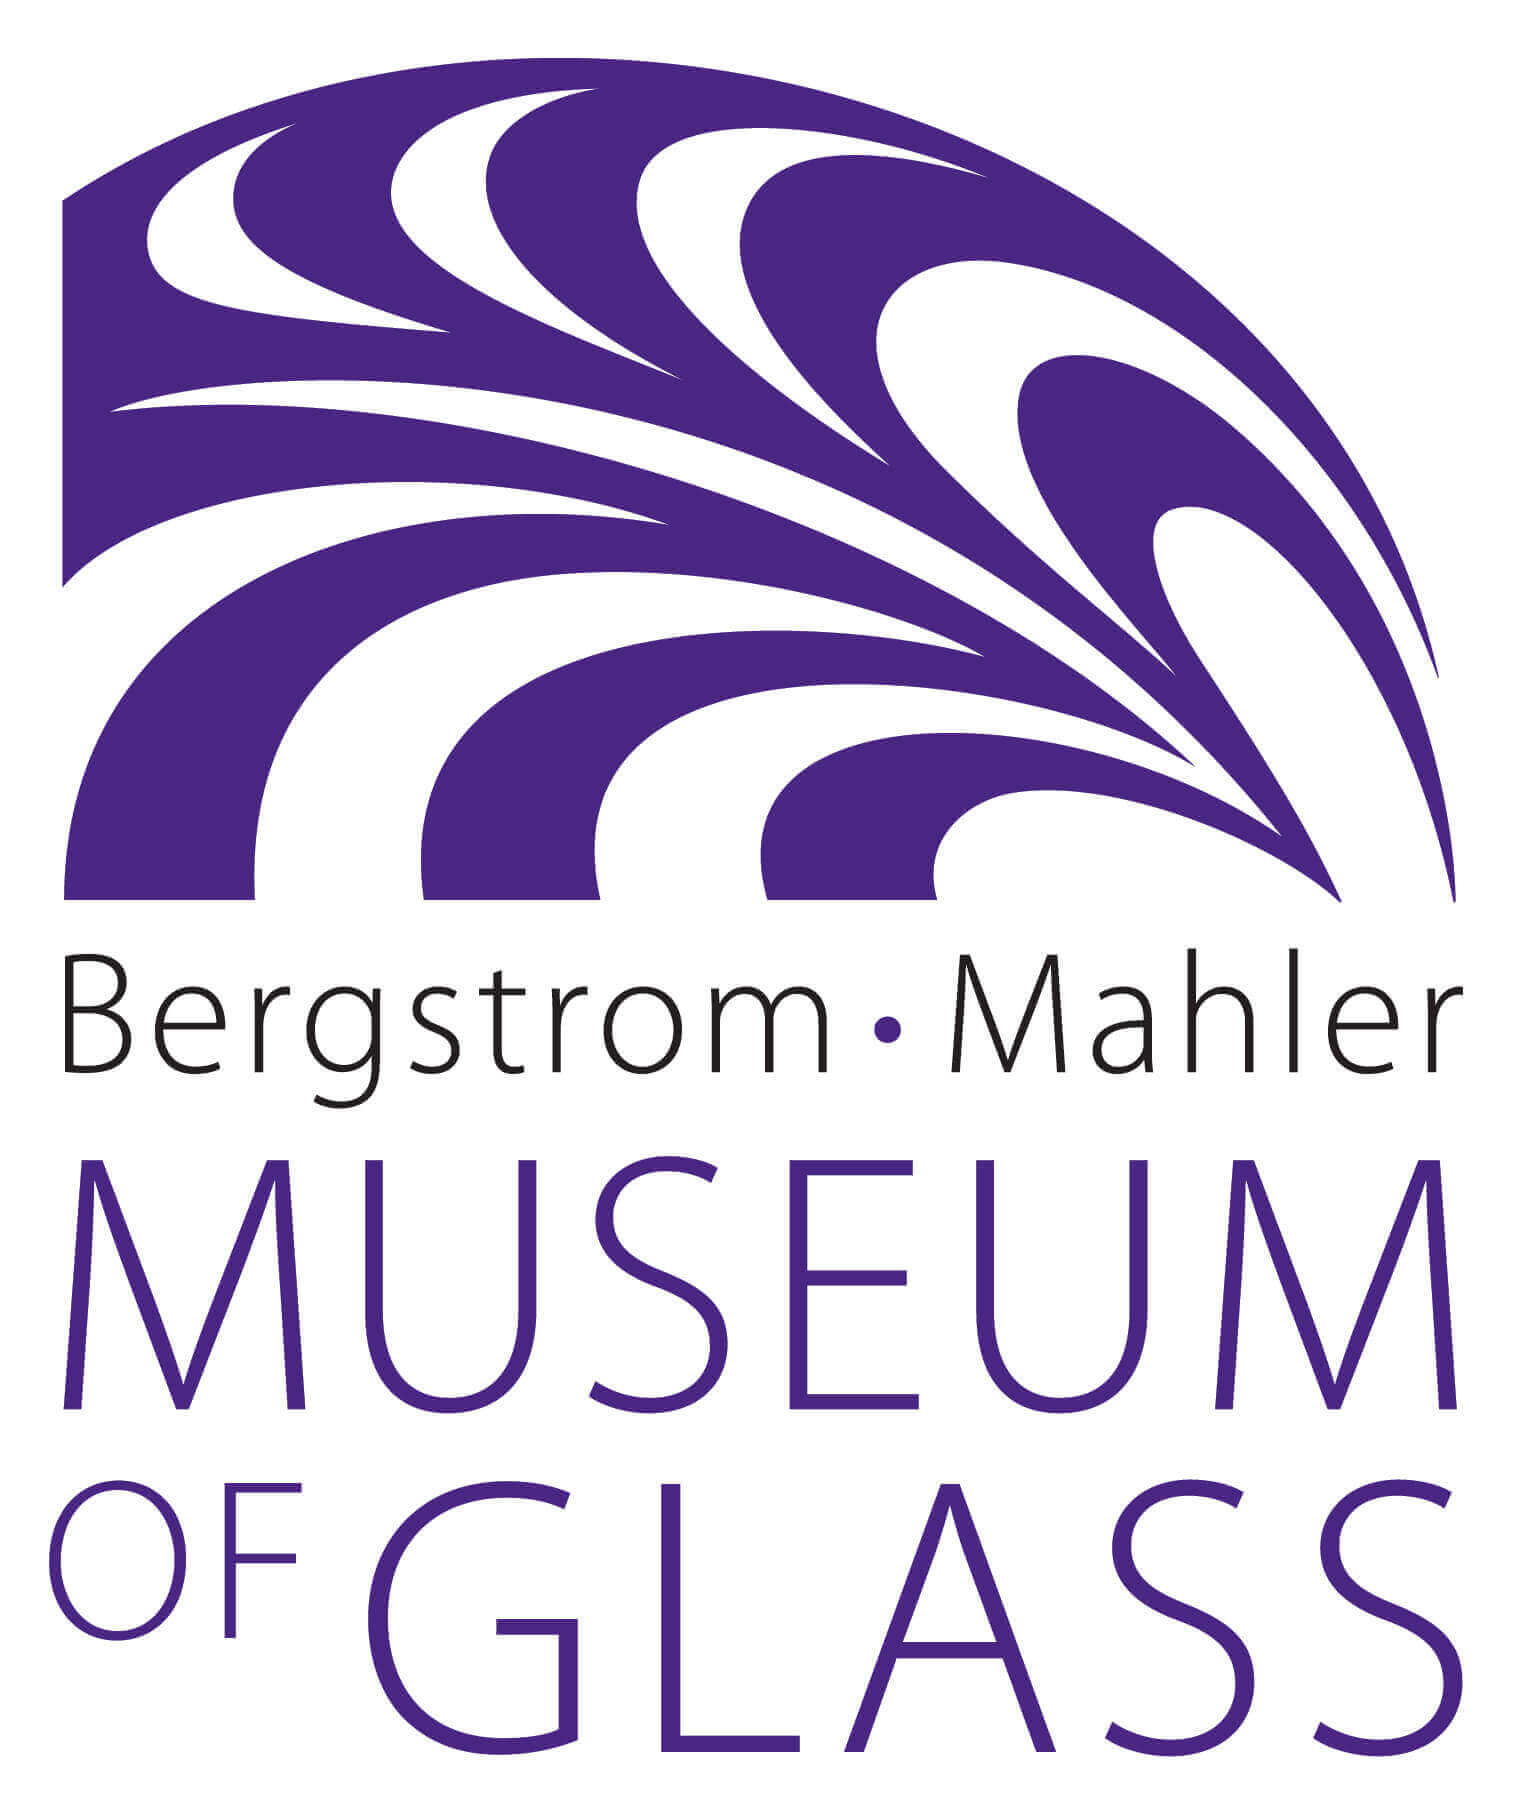 Bergstrom Mahler Museum of Glass logo in purple.